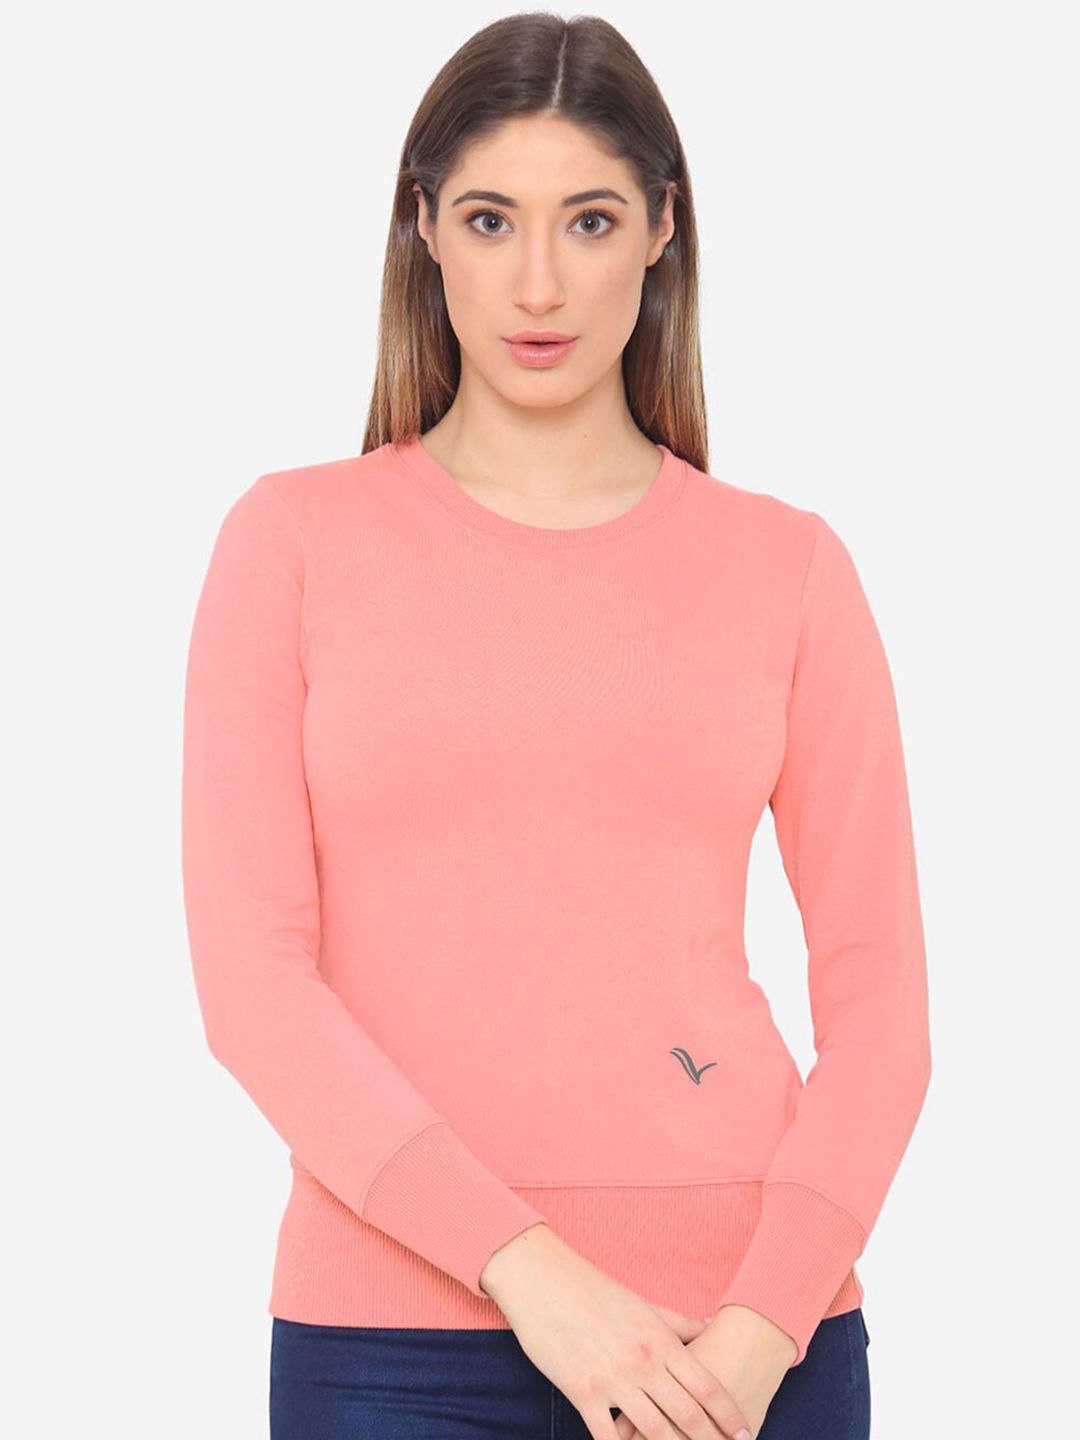 Vami Women Pink Sweatshirt Price in India